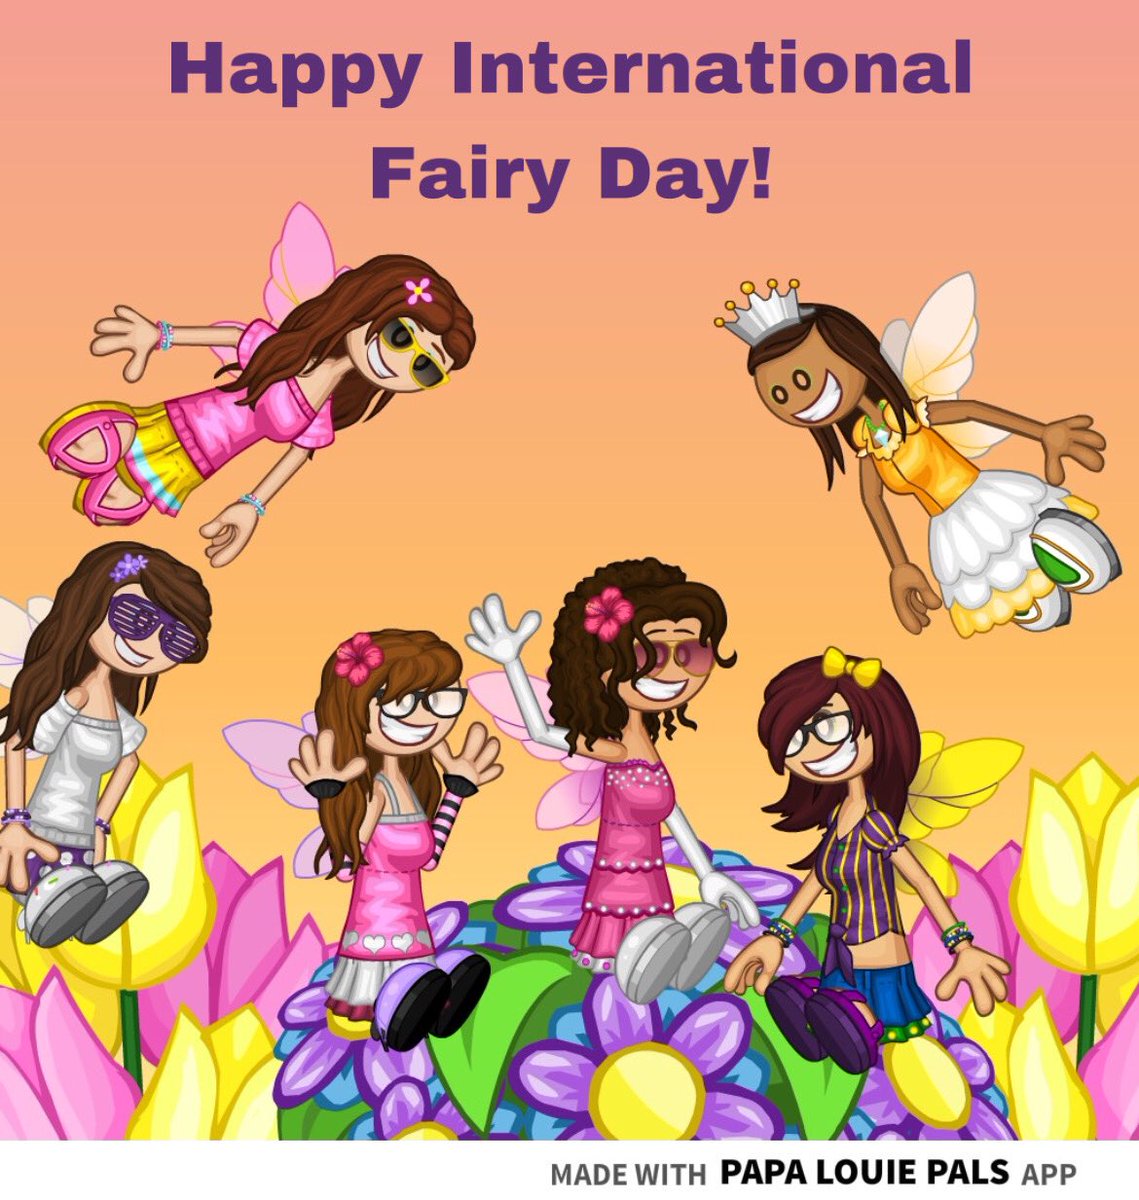 Happy International Fairy Day! 🧚‍♀️

#PapaLouiePals #FliplineStudios #InternationalFairyDay #Fairy #FairyDay